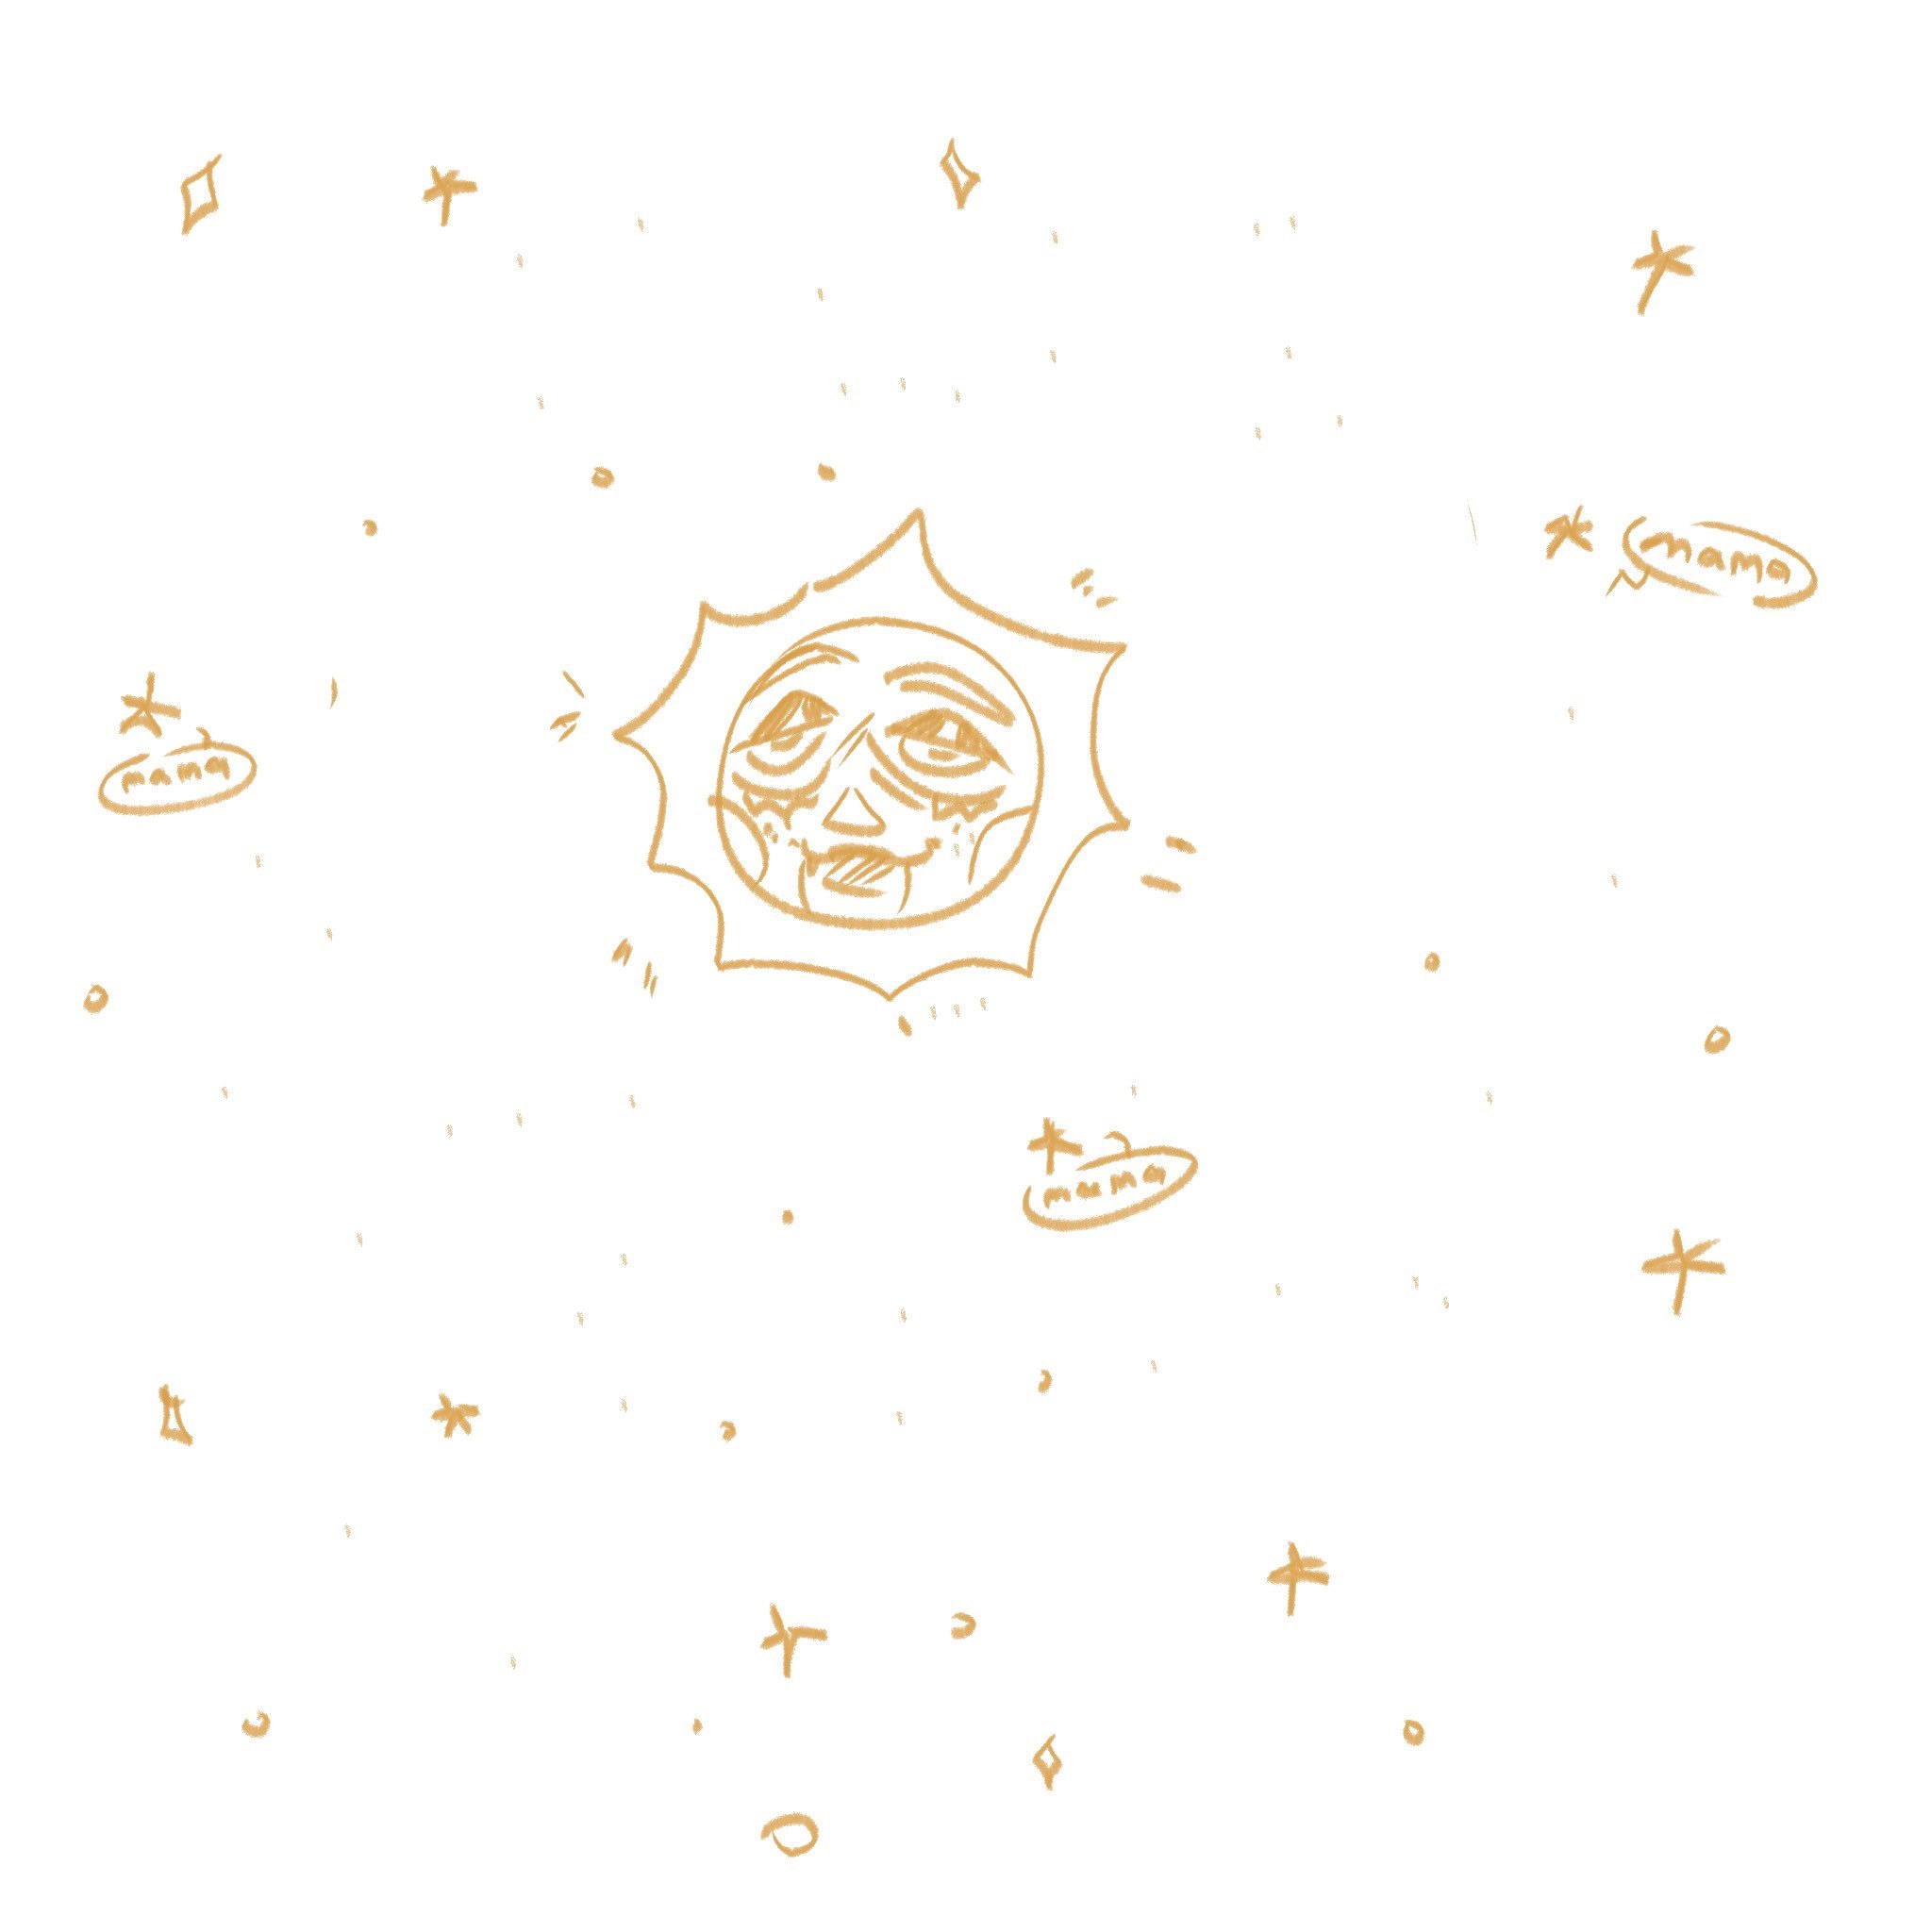 Sunny and Their Stars (Harmony and Horror)